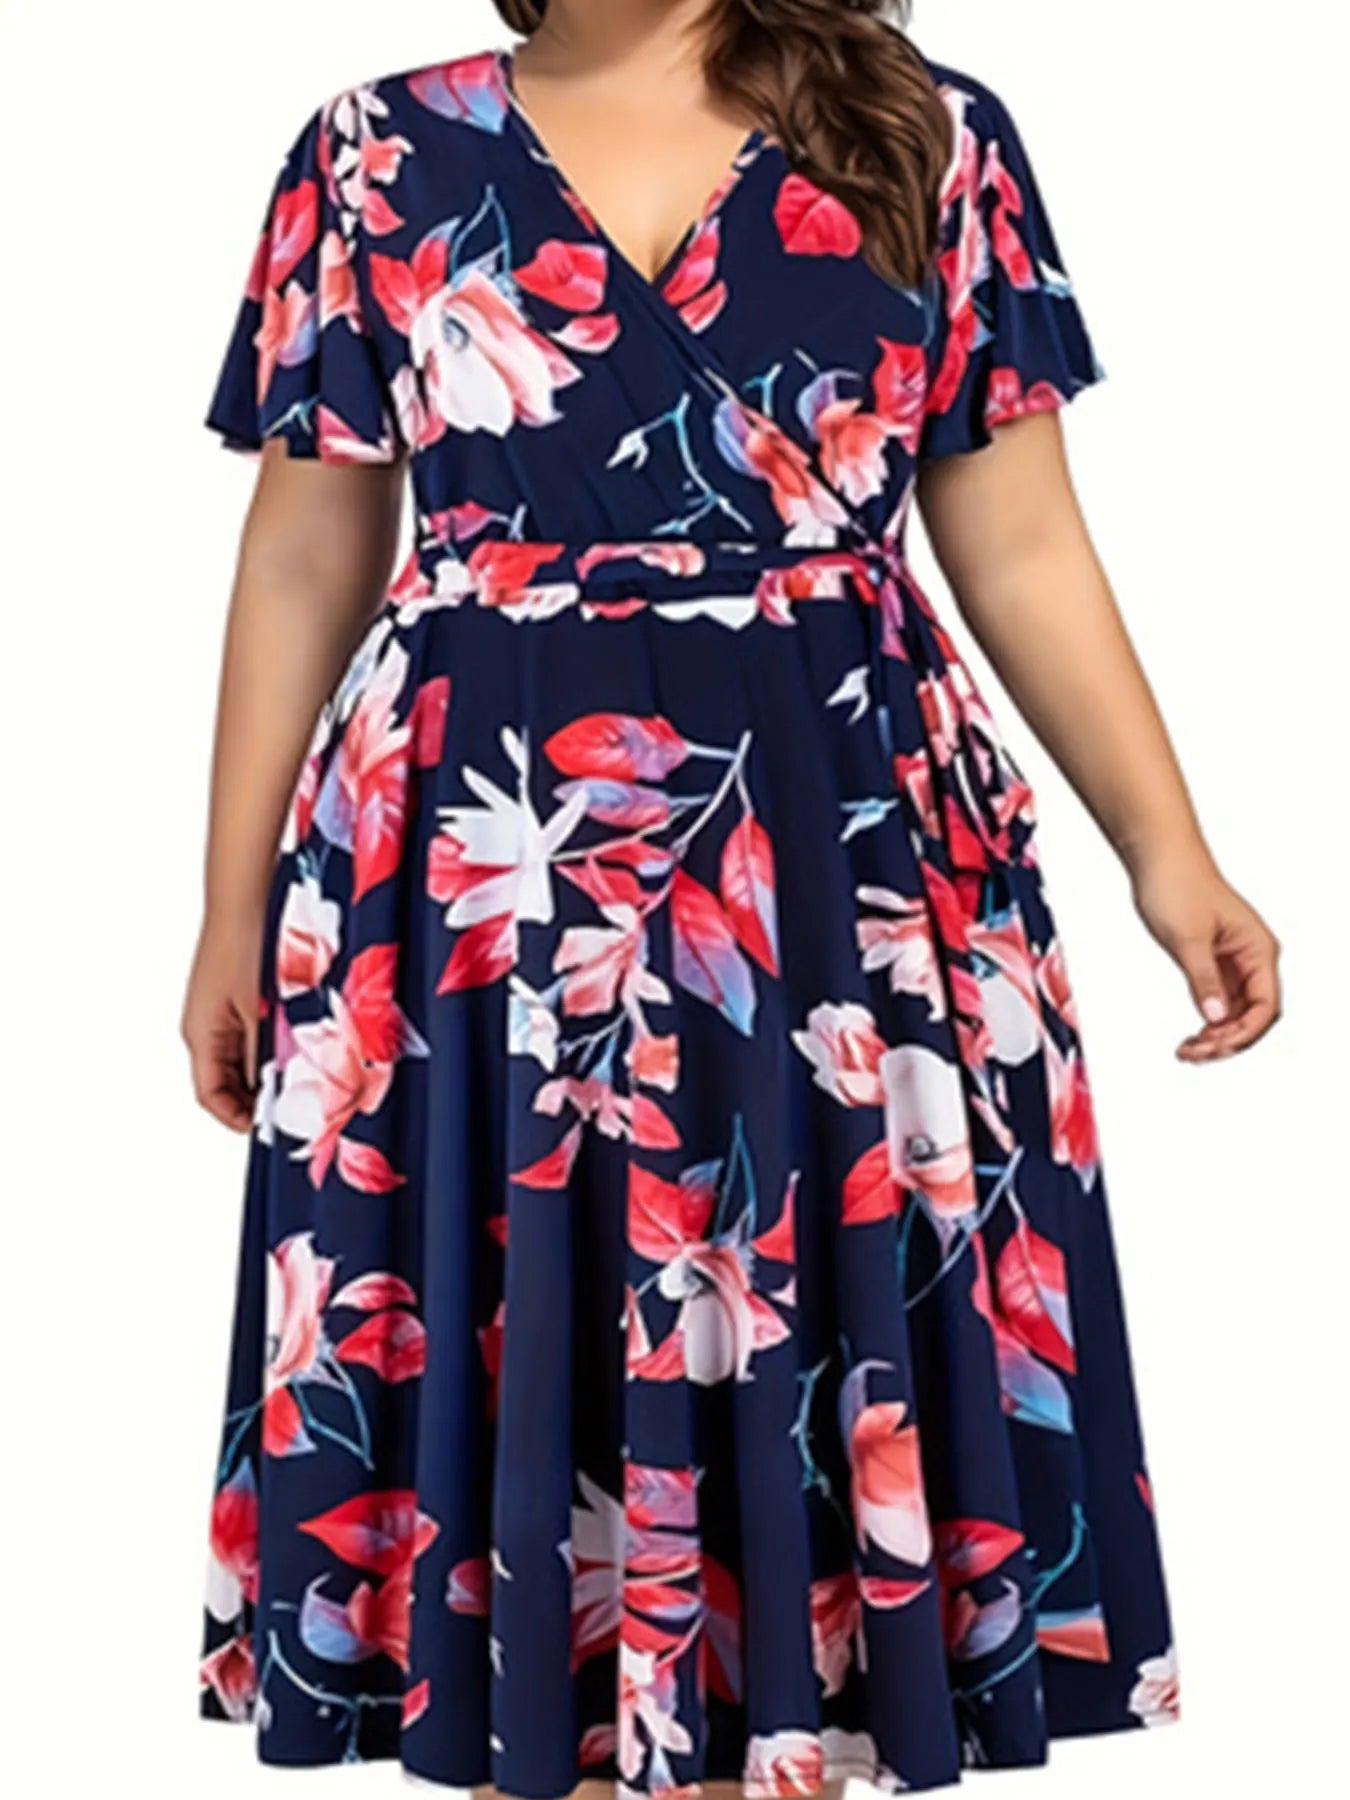 Plus Size Floral Print Cinched Waist Dress, Elegant Short Sleeve Dress For Spring & Summer, Women's Plus Size Clothing